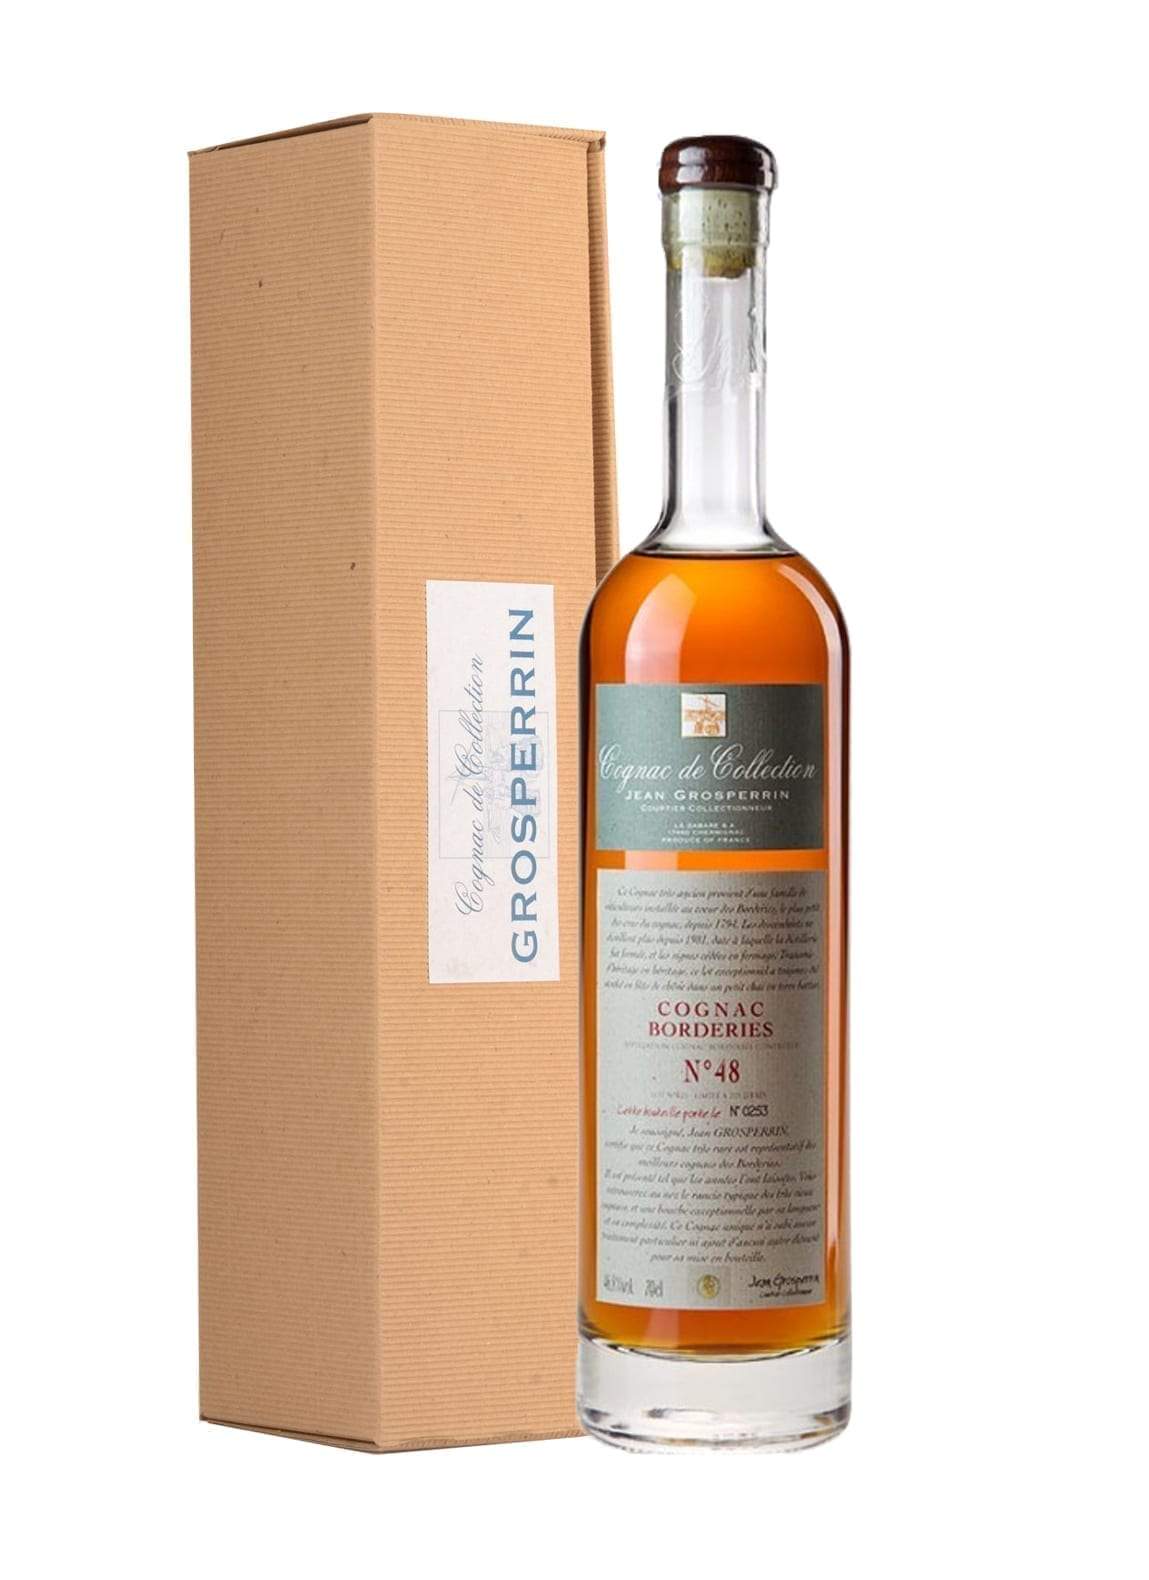 Grosperrin Cognac No 48 Borderies 46.8% 700ml | Brandy | Shop online at Spirits of France